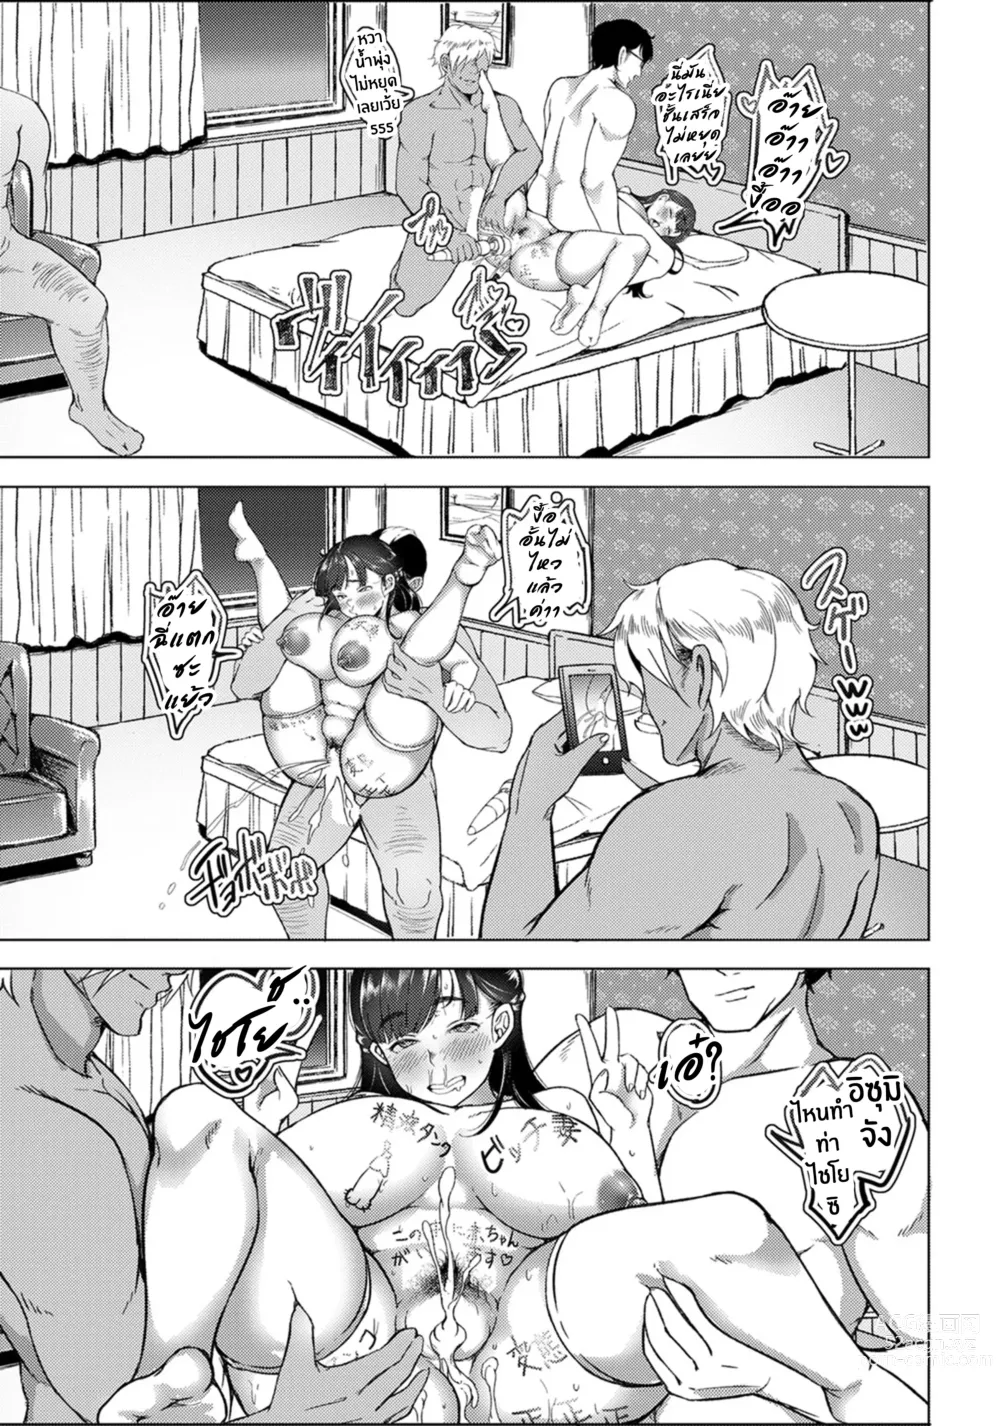 Page 15 of manga NTRAV ในหน้าจอนั้นเป็นภรรยาสุดที่รักของผมที่กำลังท้องอยู่